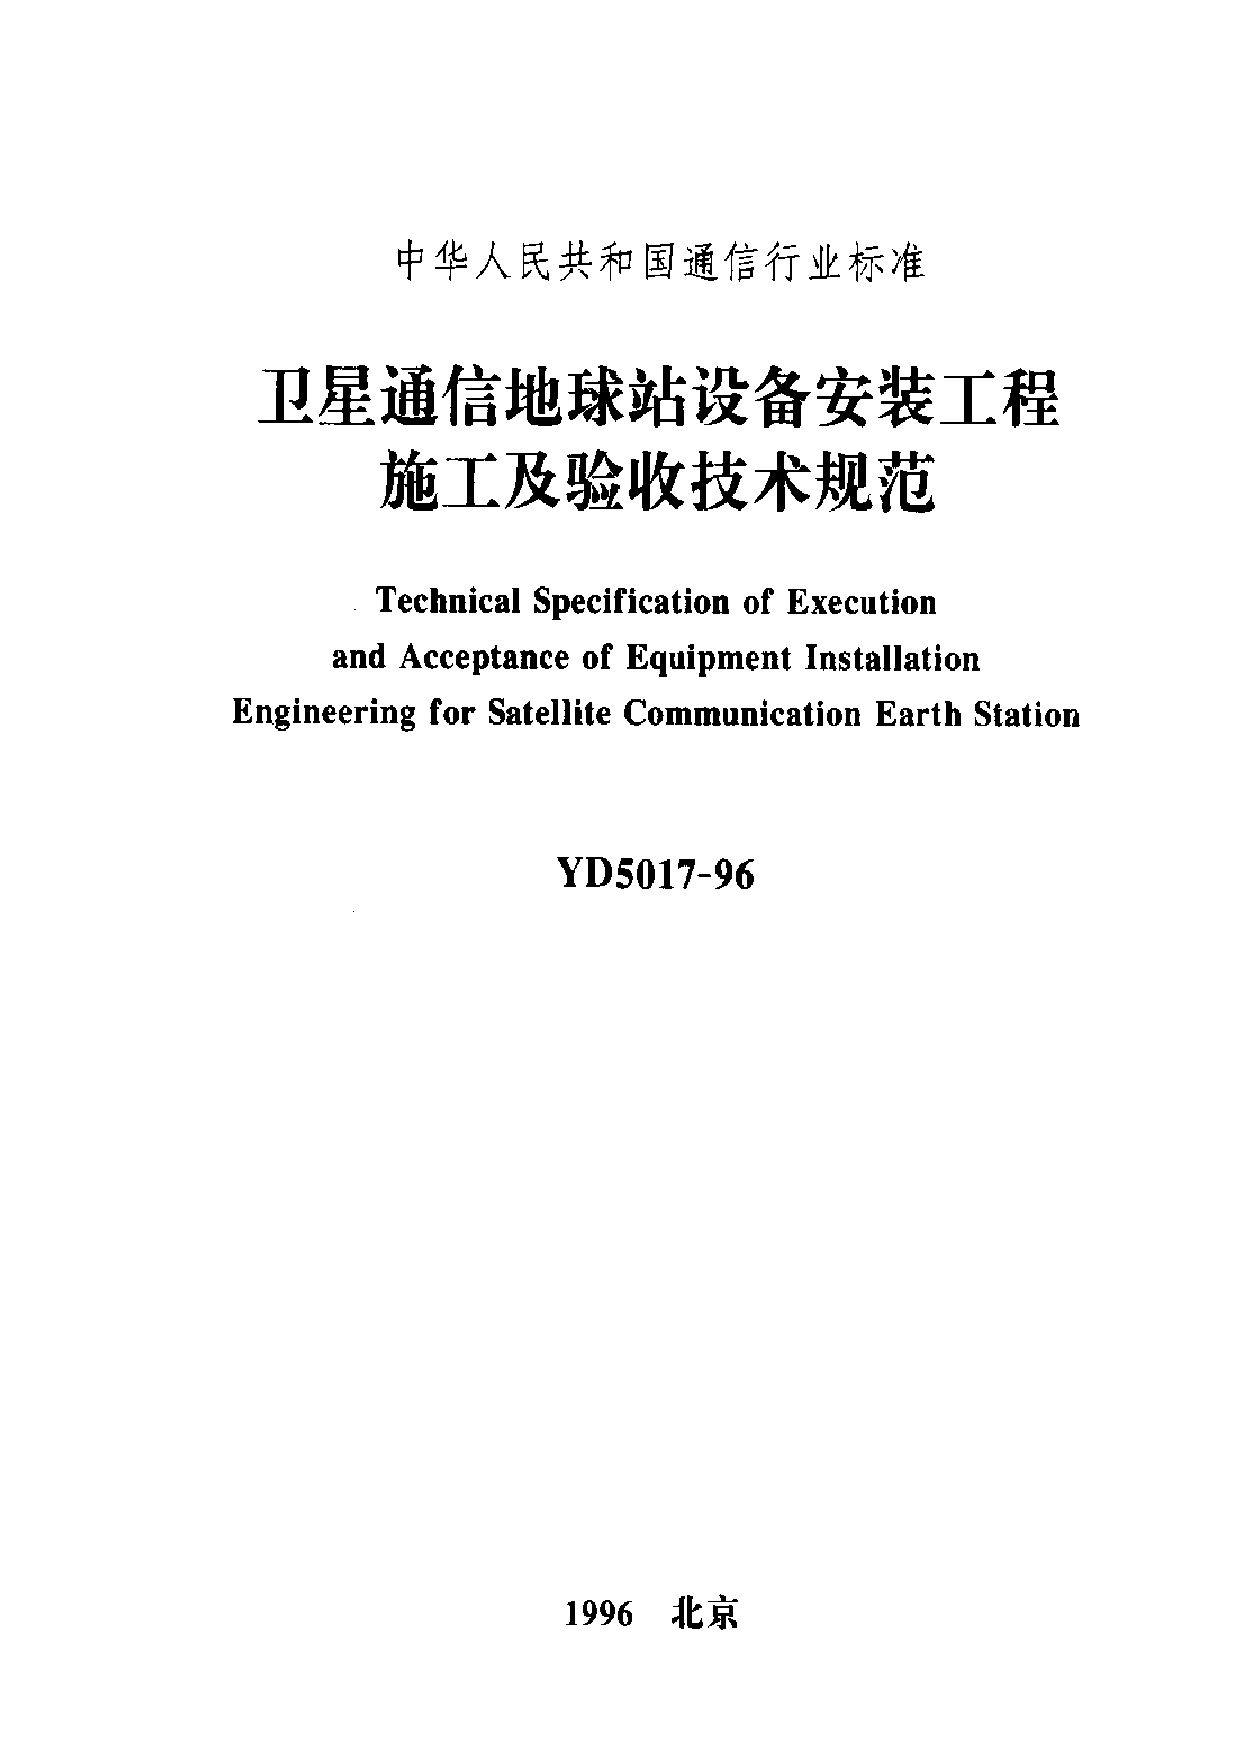 YD 5017-1996封面图